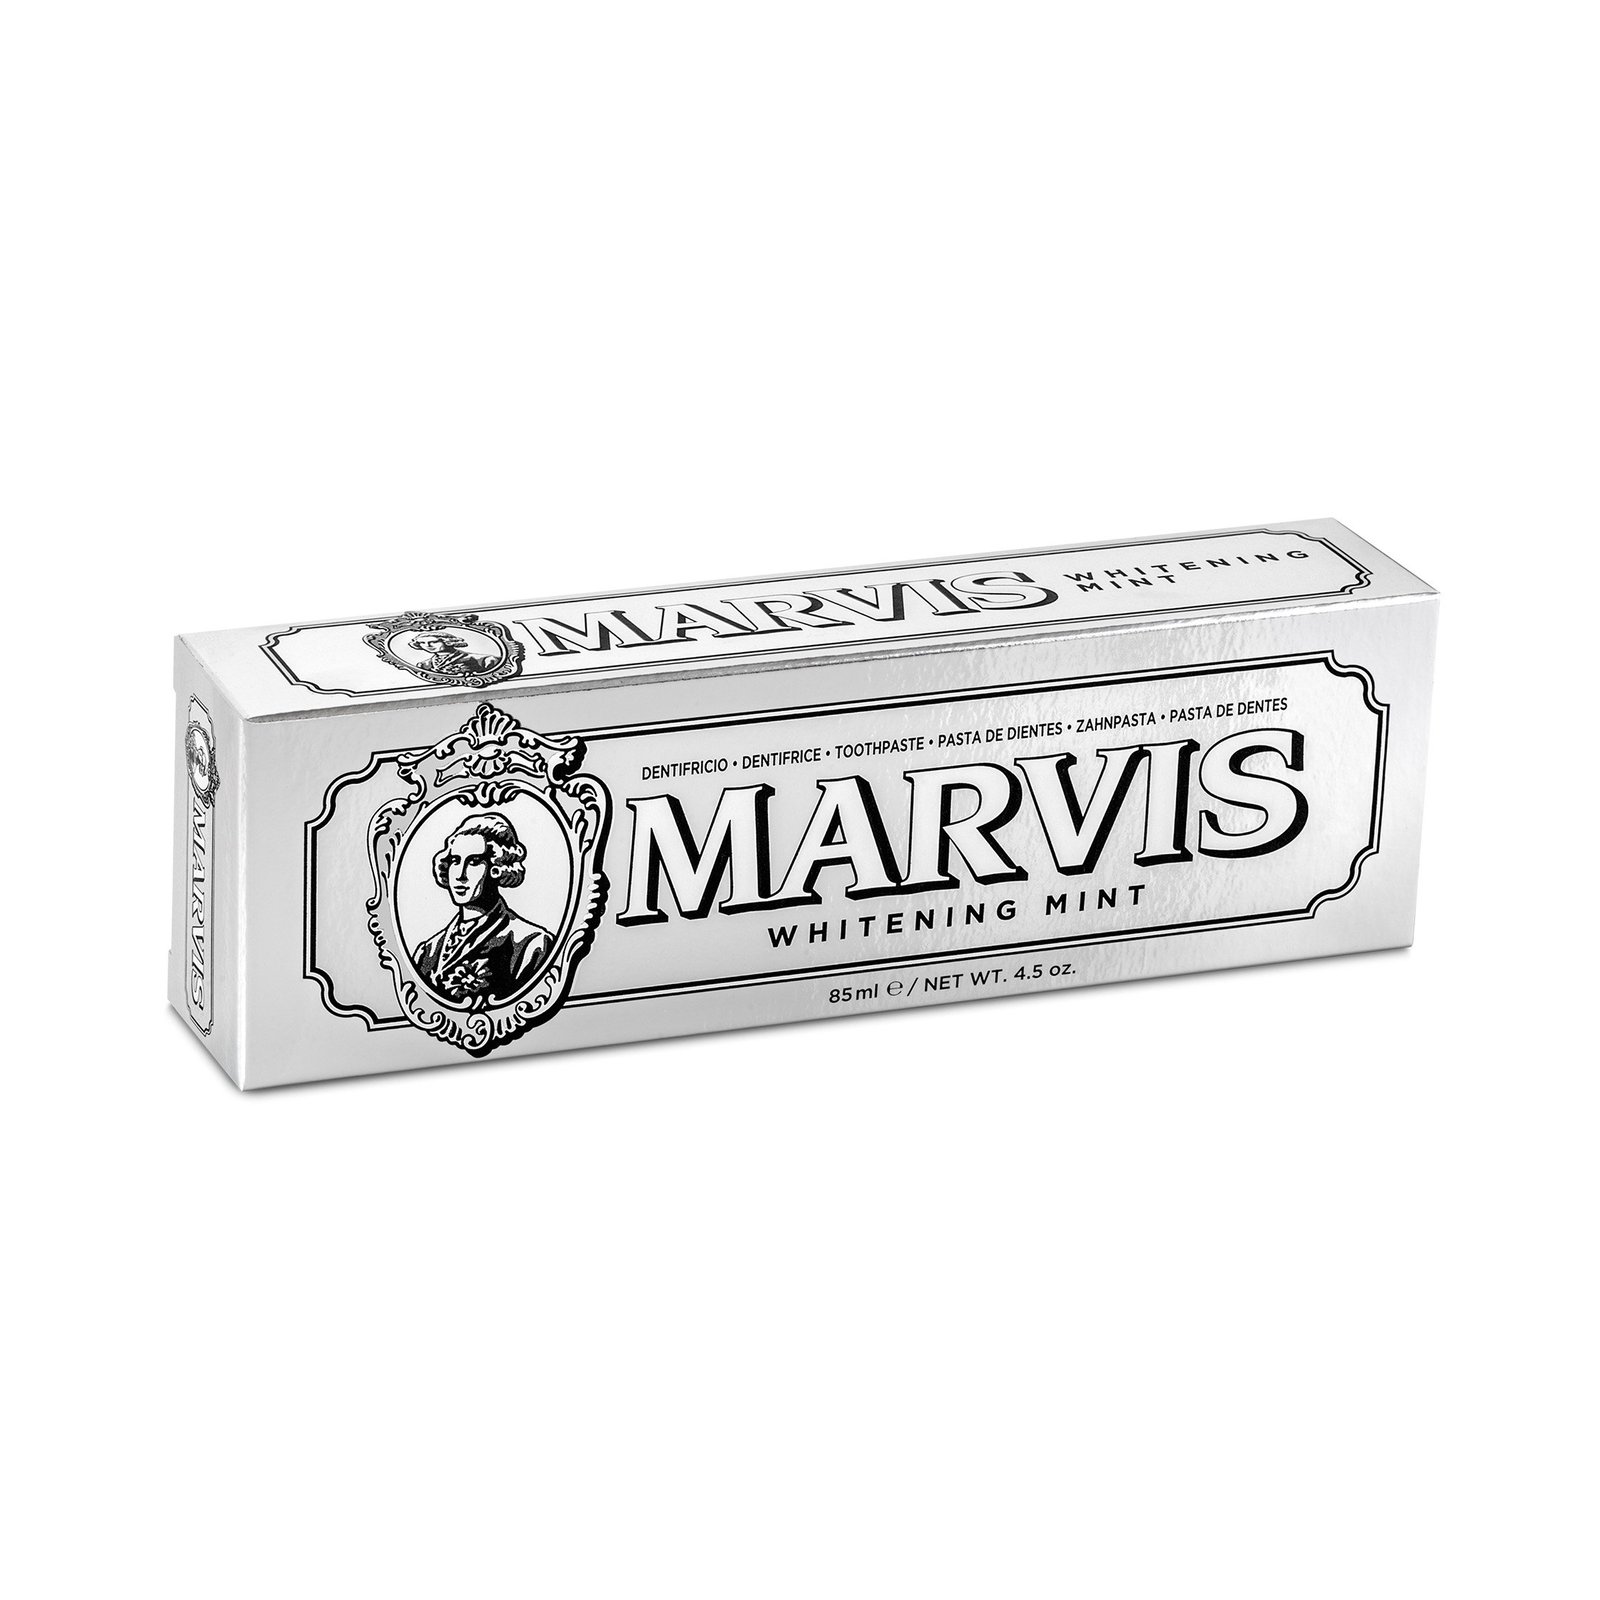 Marvis Whitening Mint 85ml